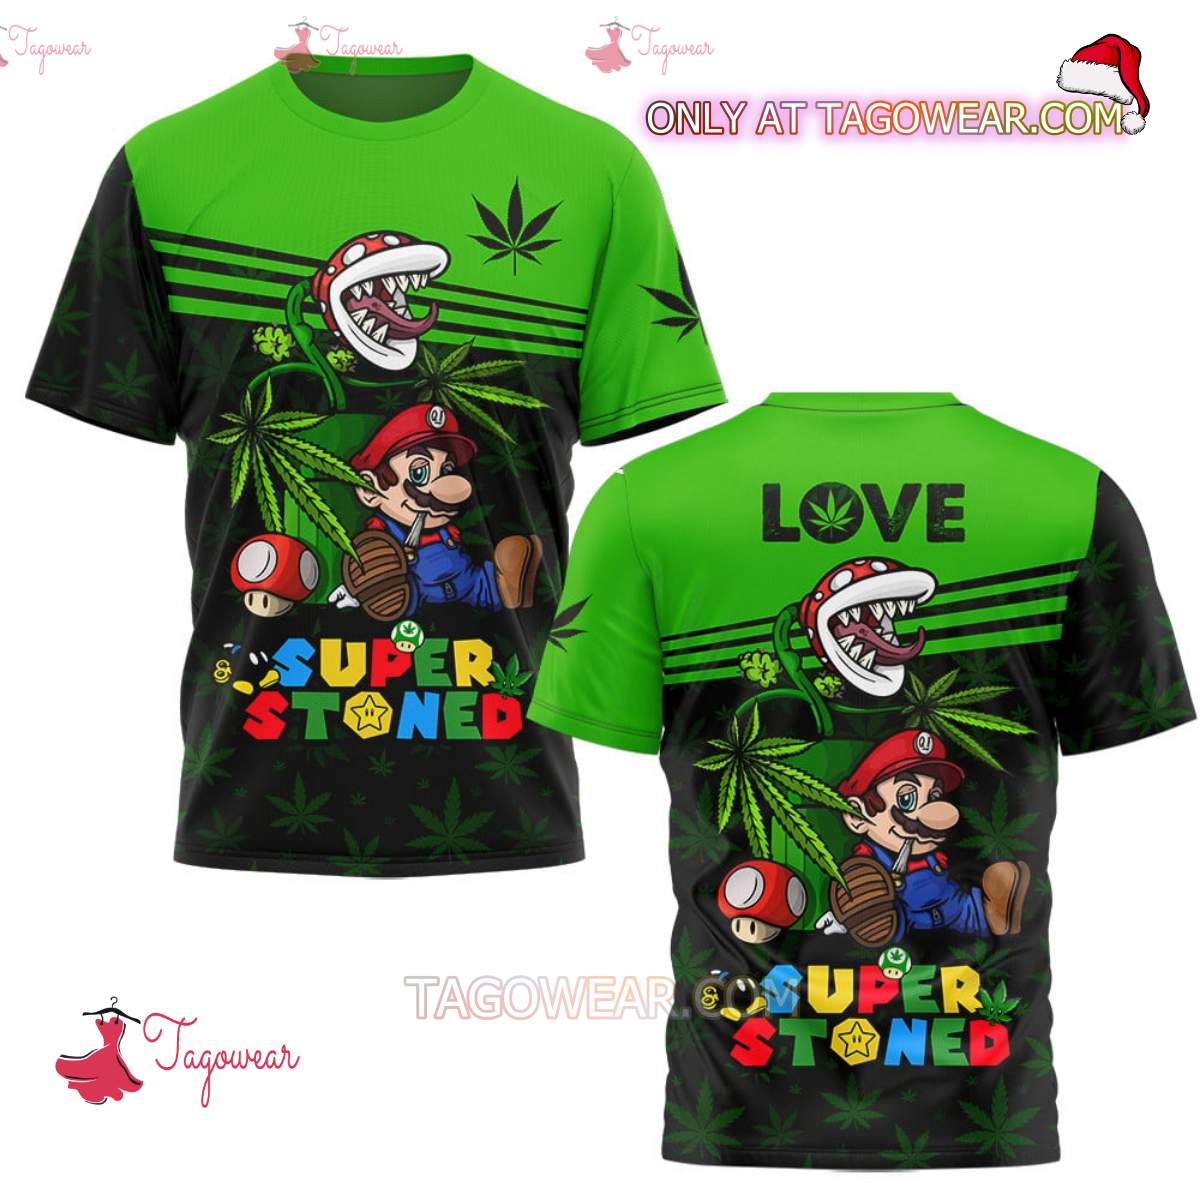 Super Mario Love Super Stoned T-shirt And Pants a